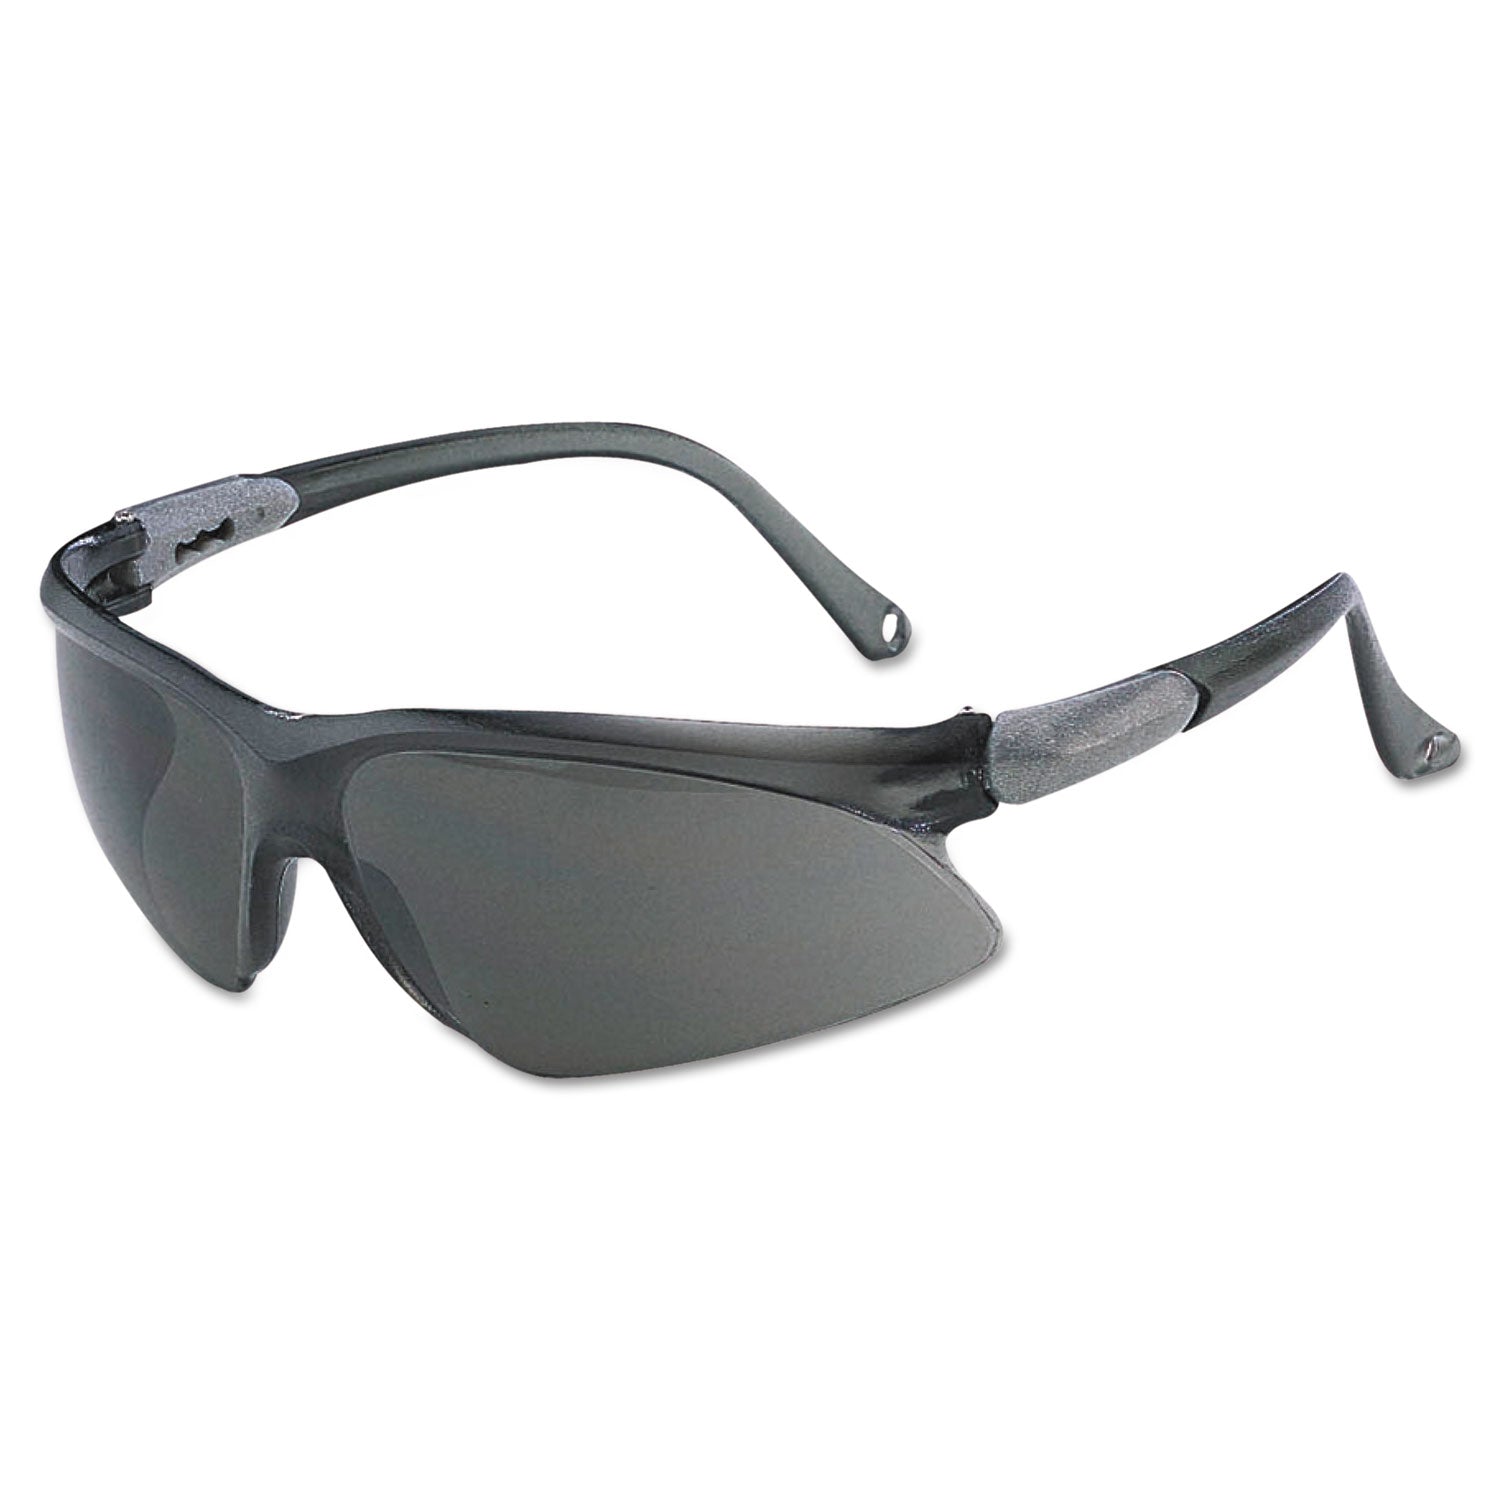 v20-visio-safety-glasses-silver-frame-smoke-lens_kcc14472 - 1